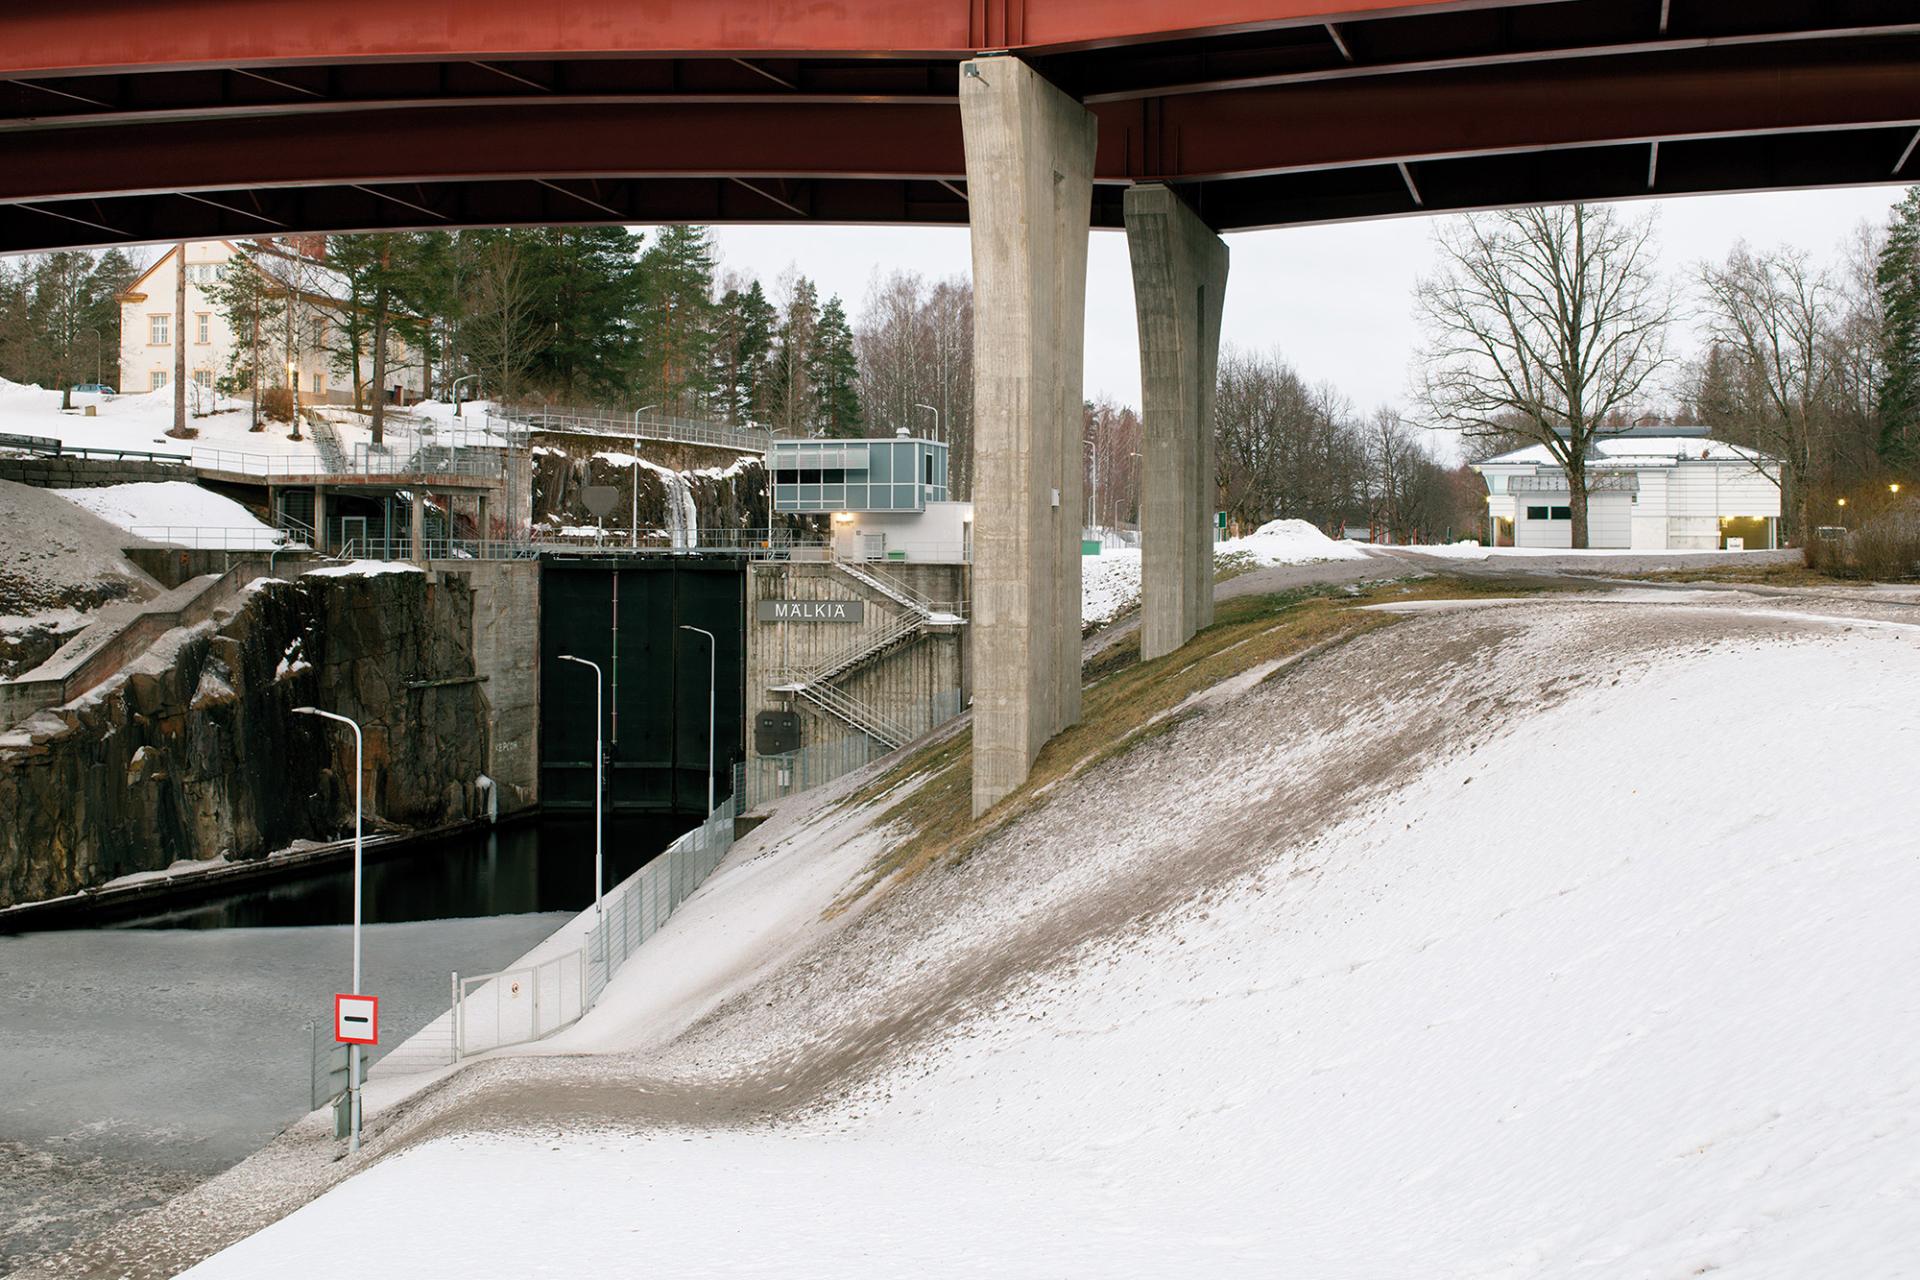 Mälkiä canal and a bridge.